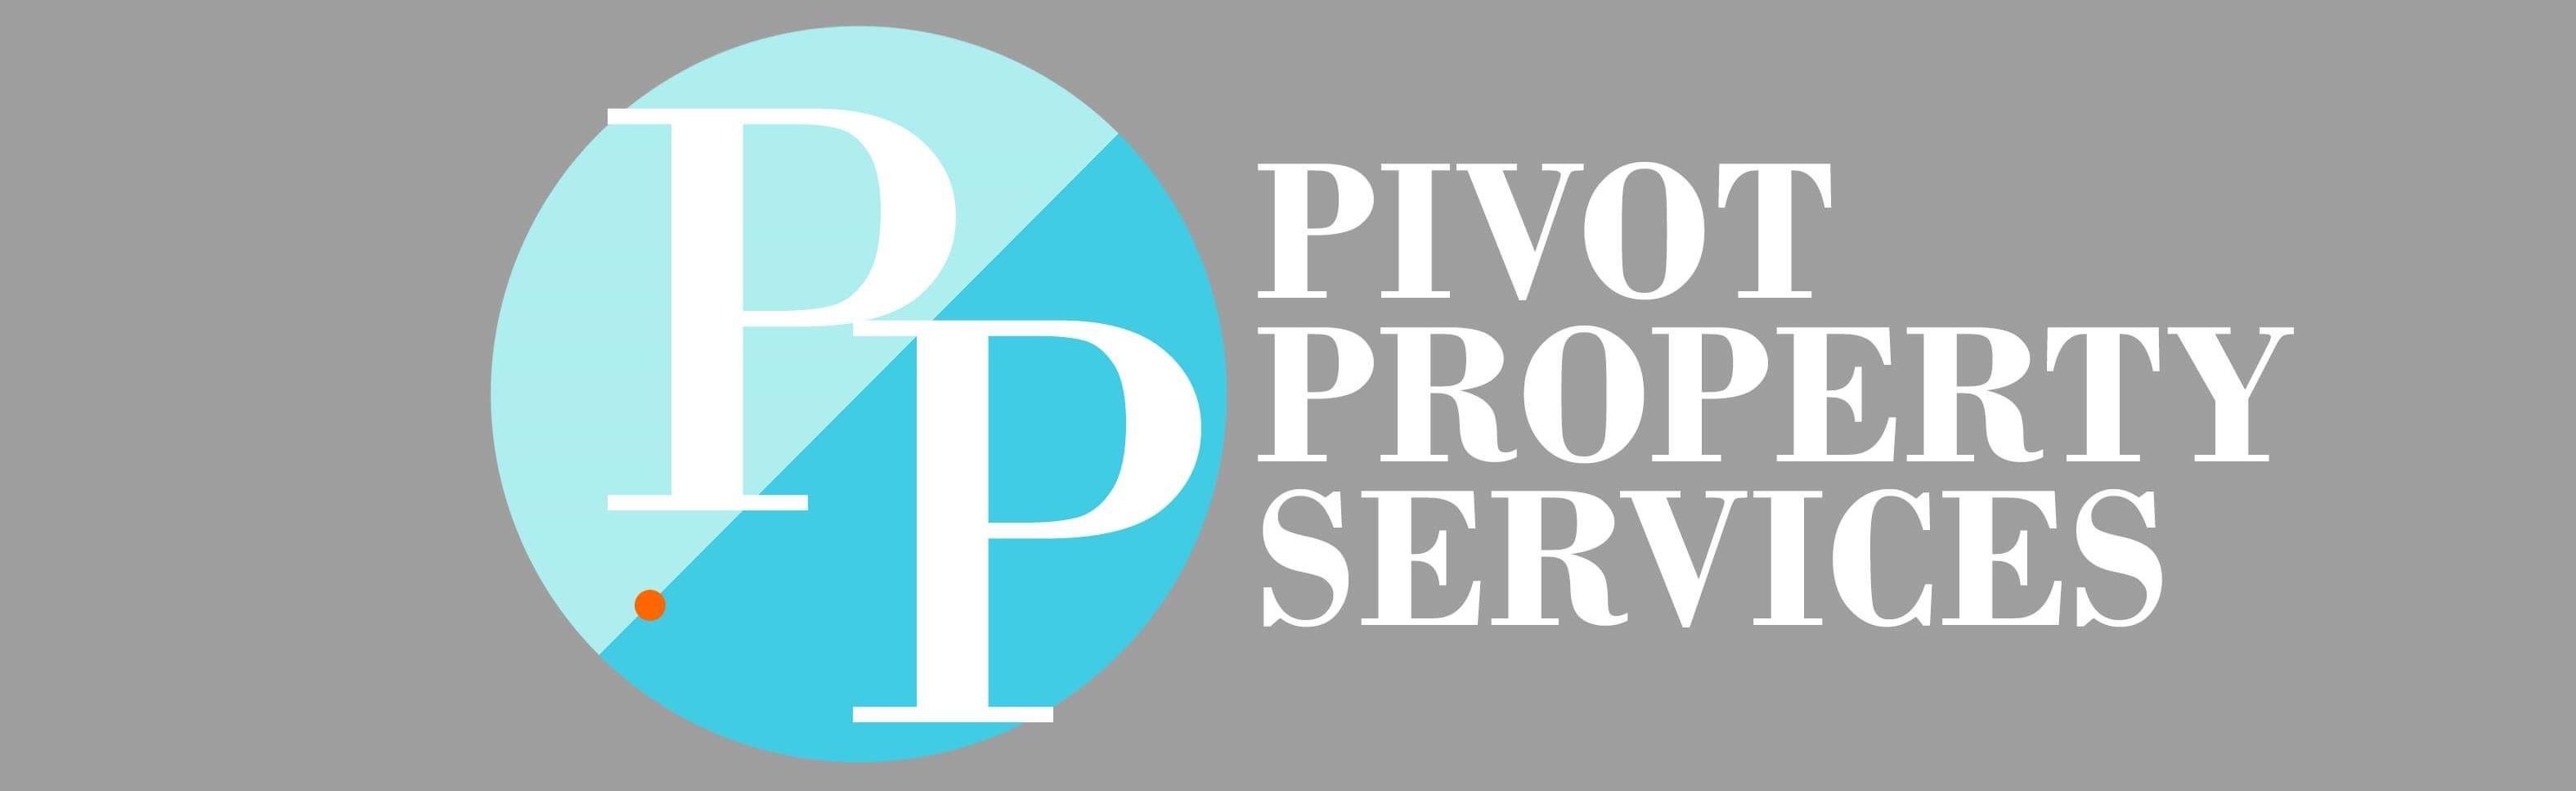 Pivot Property Services